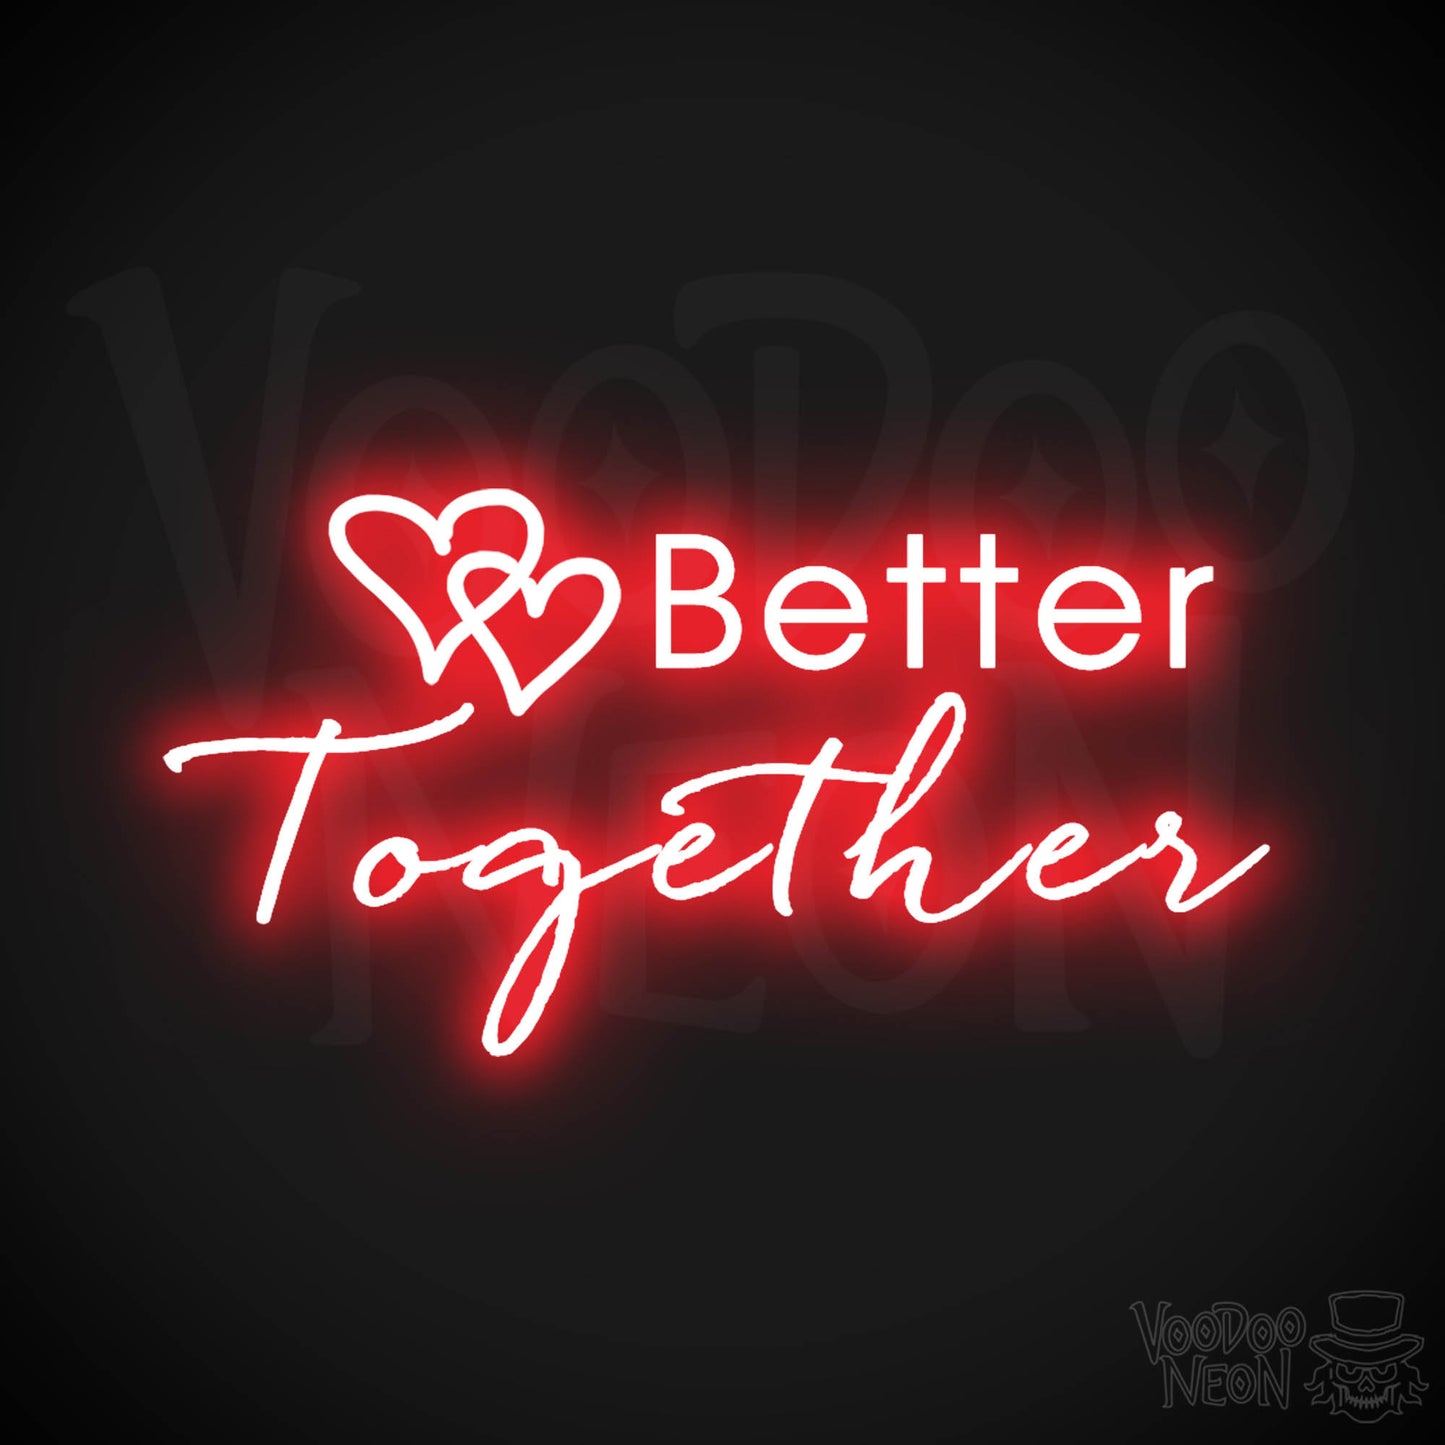 Better Together Neon Sign - Neon Better Together Sign - LED Light Up - Color Red